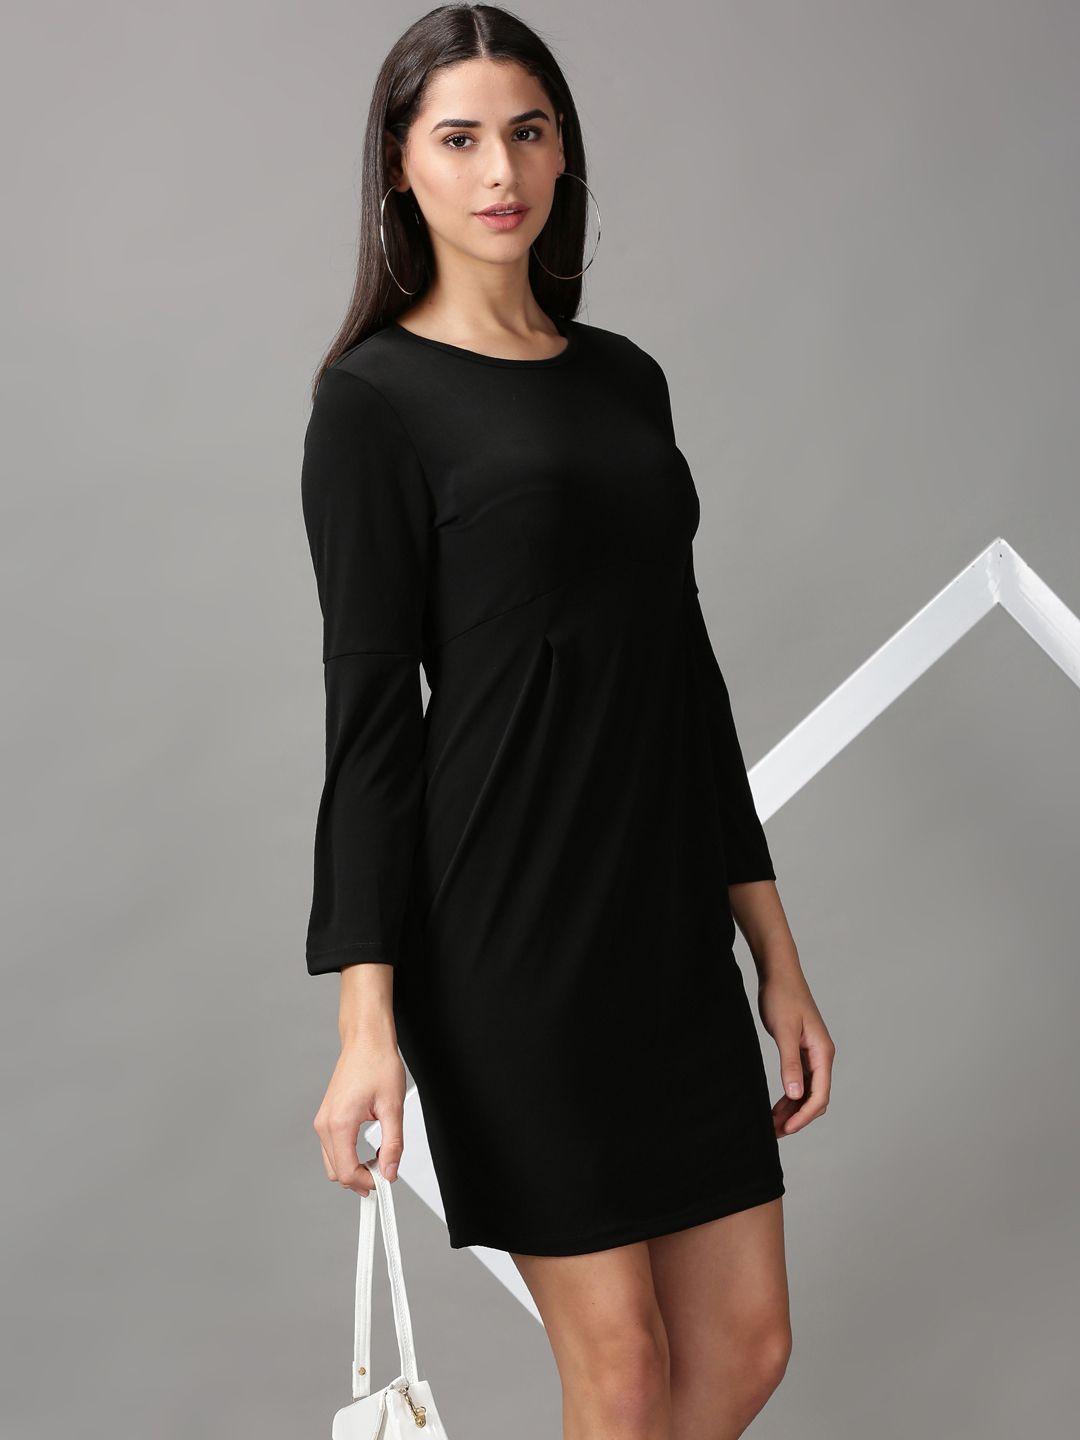 showoff black solid sheath dress